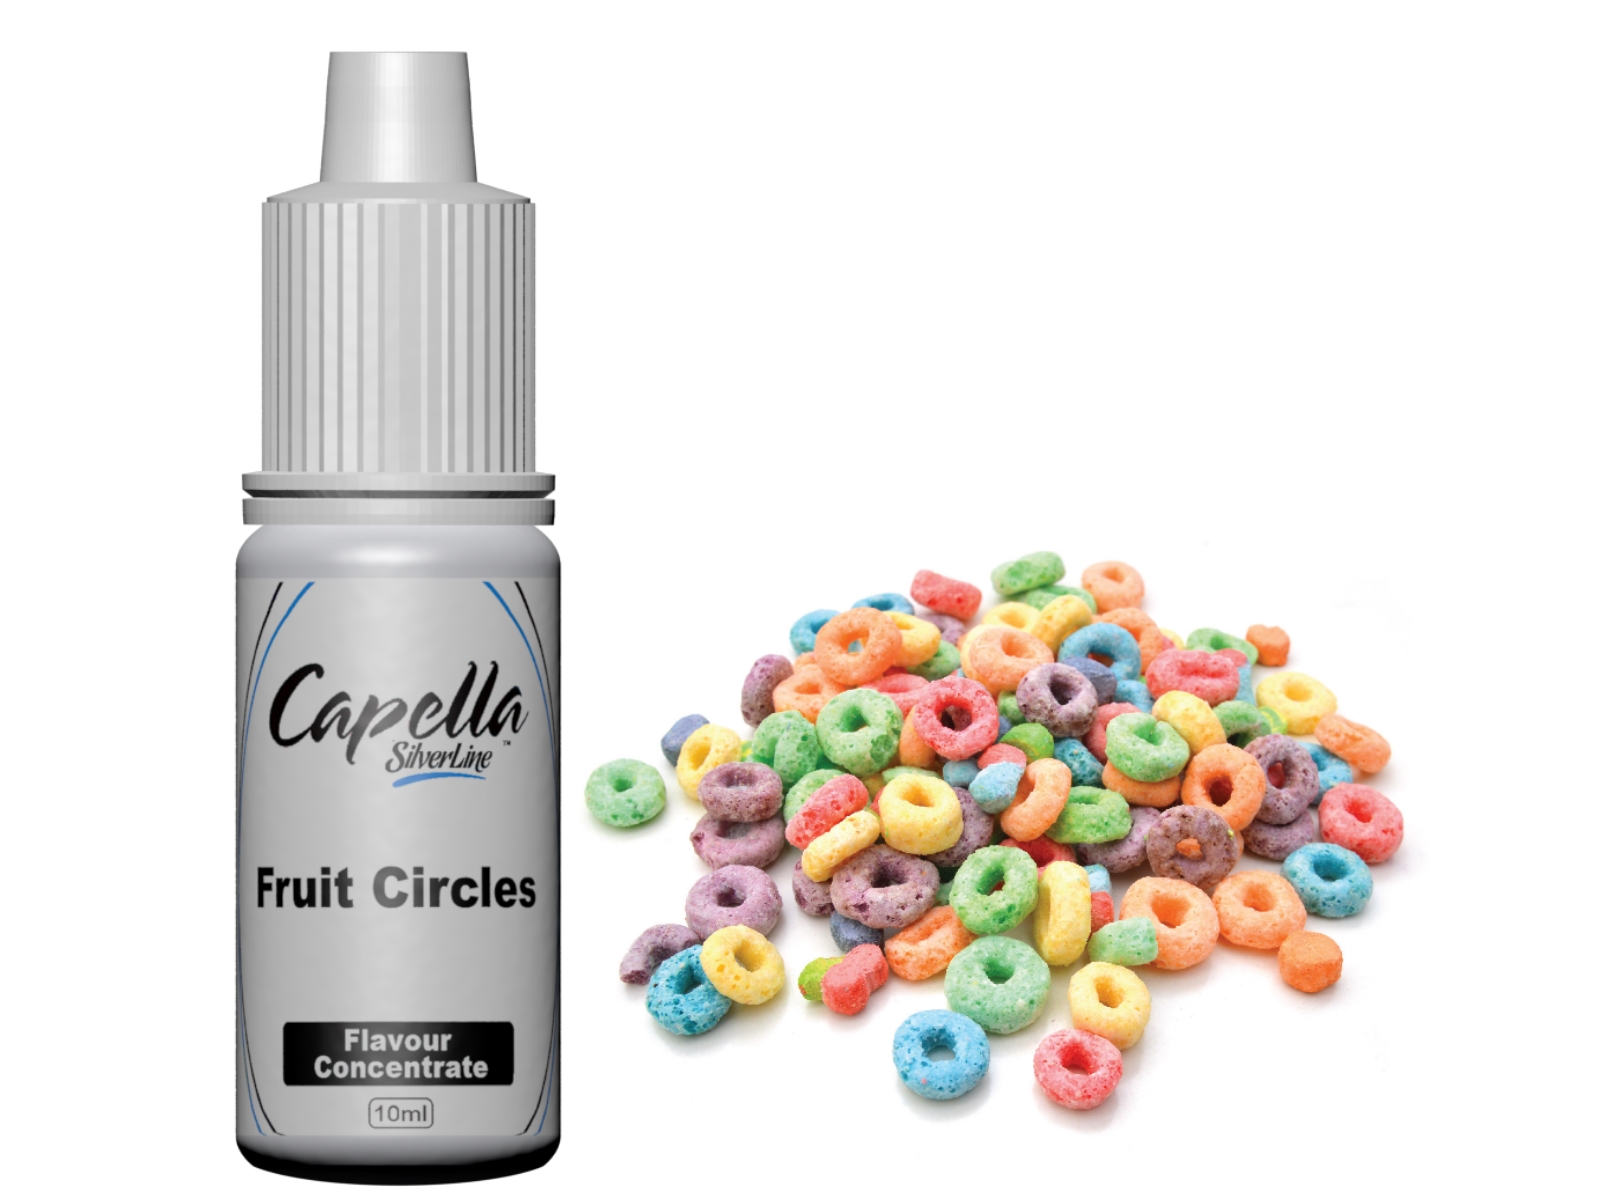 Capella Silverline Fruit Circles